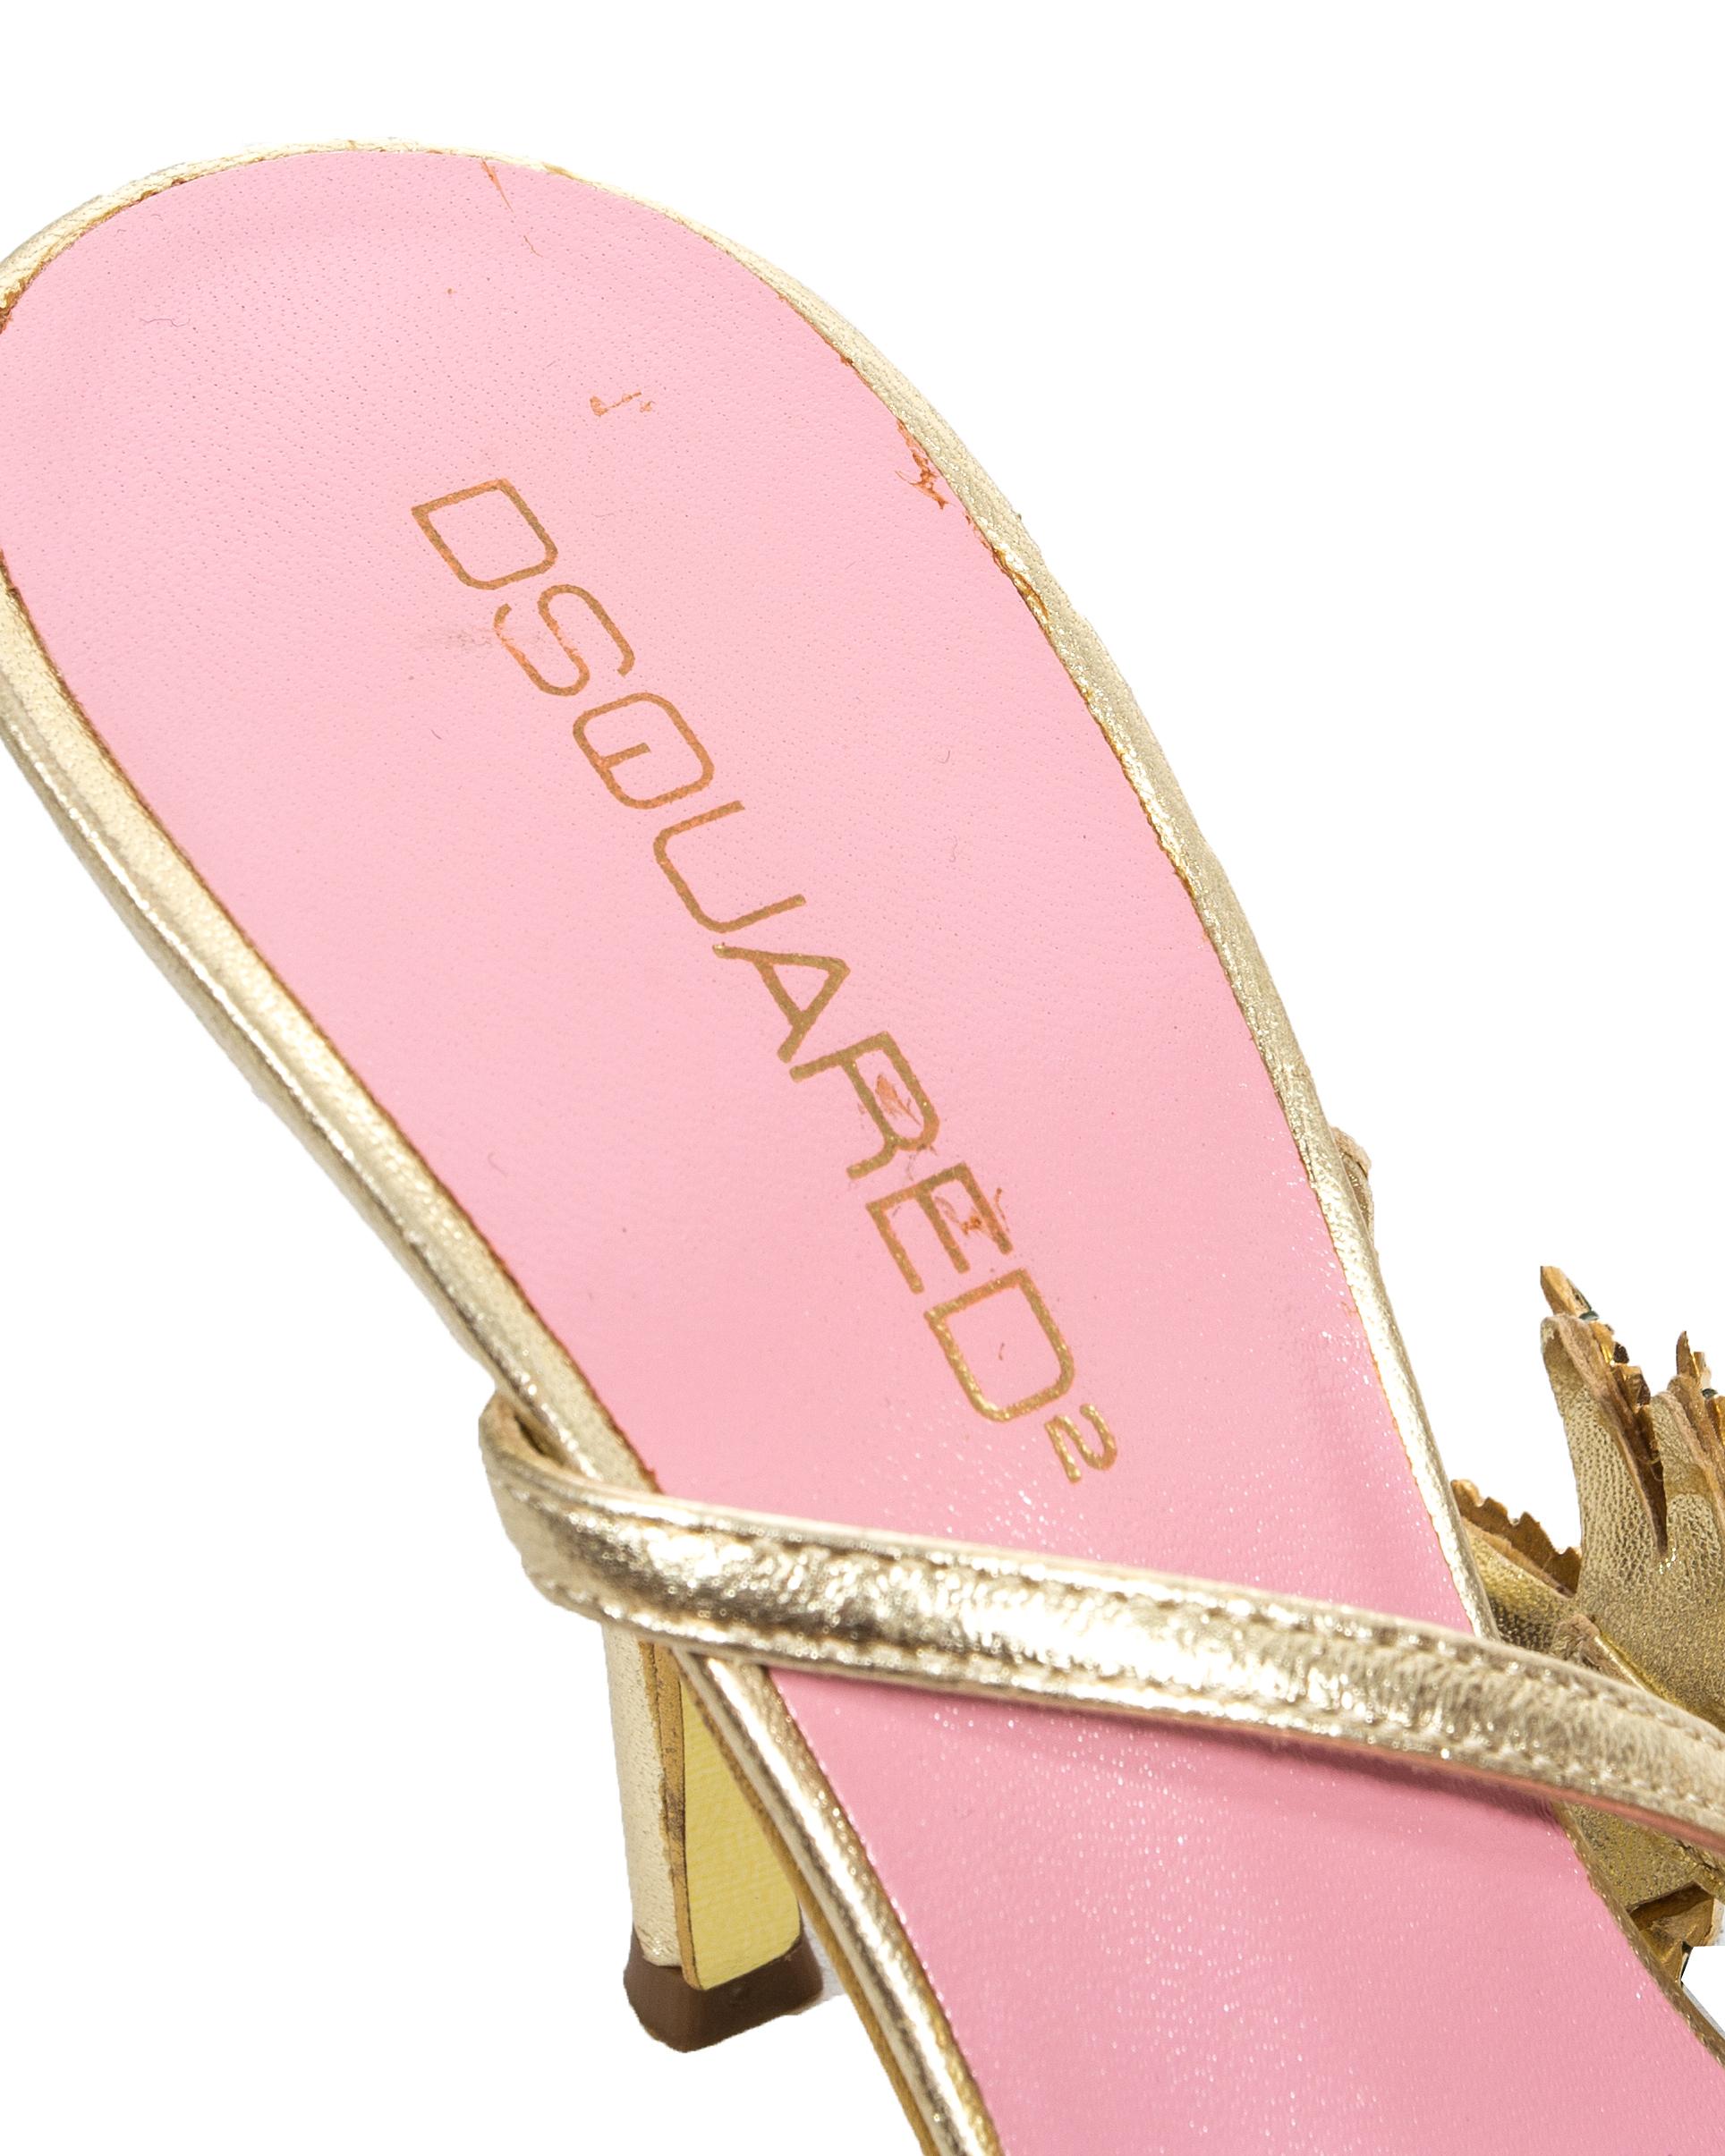 Gold Dsquared2 marijuana leaf gold leather sandals, ss 2005